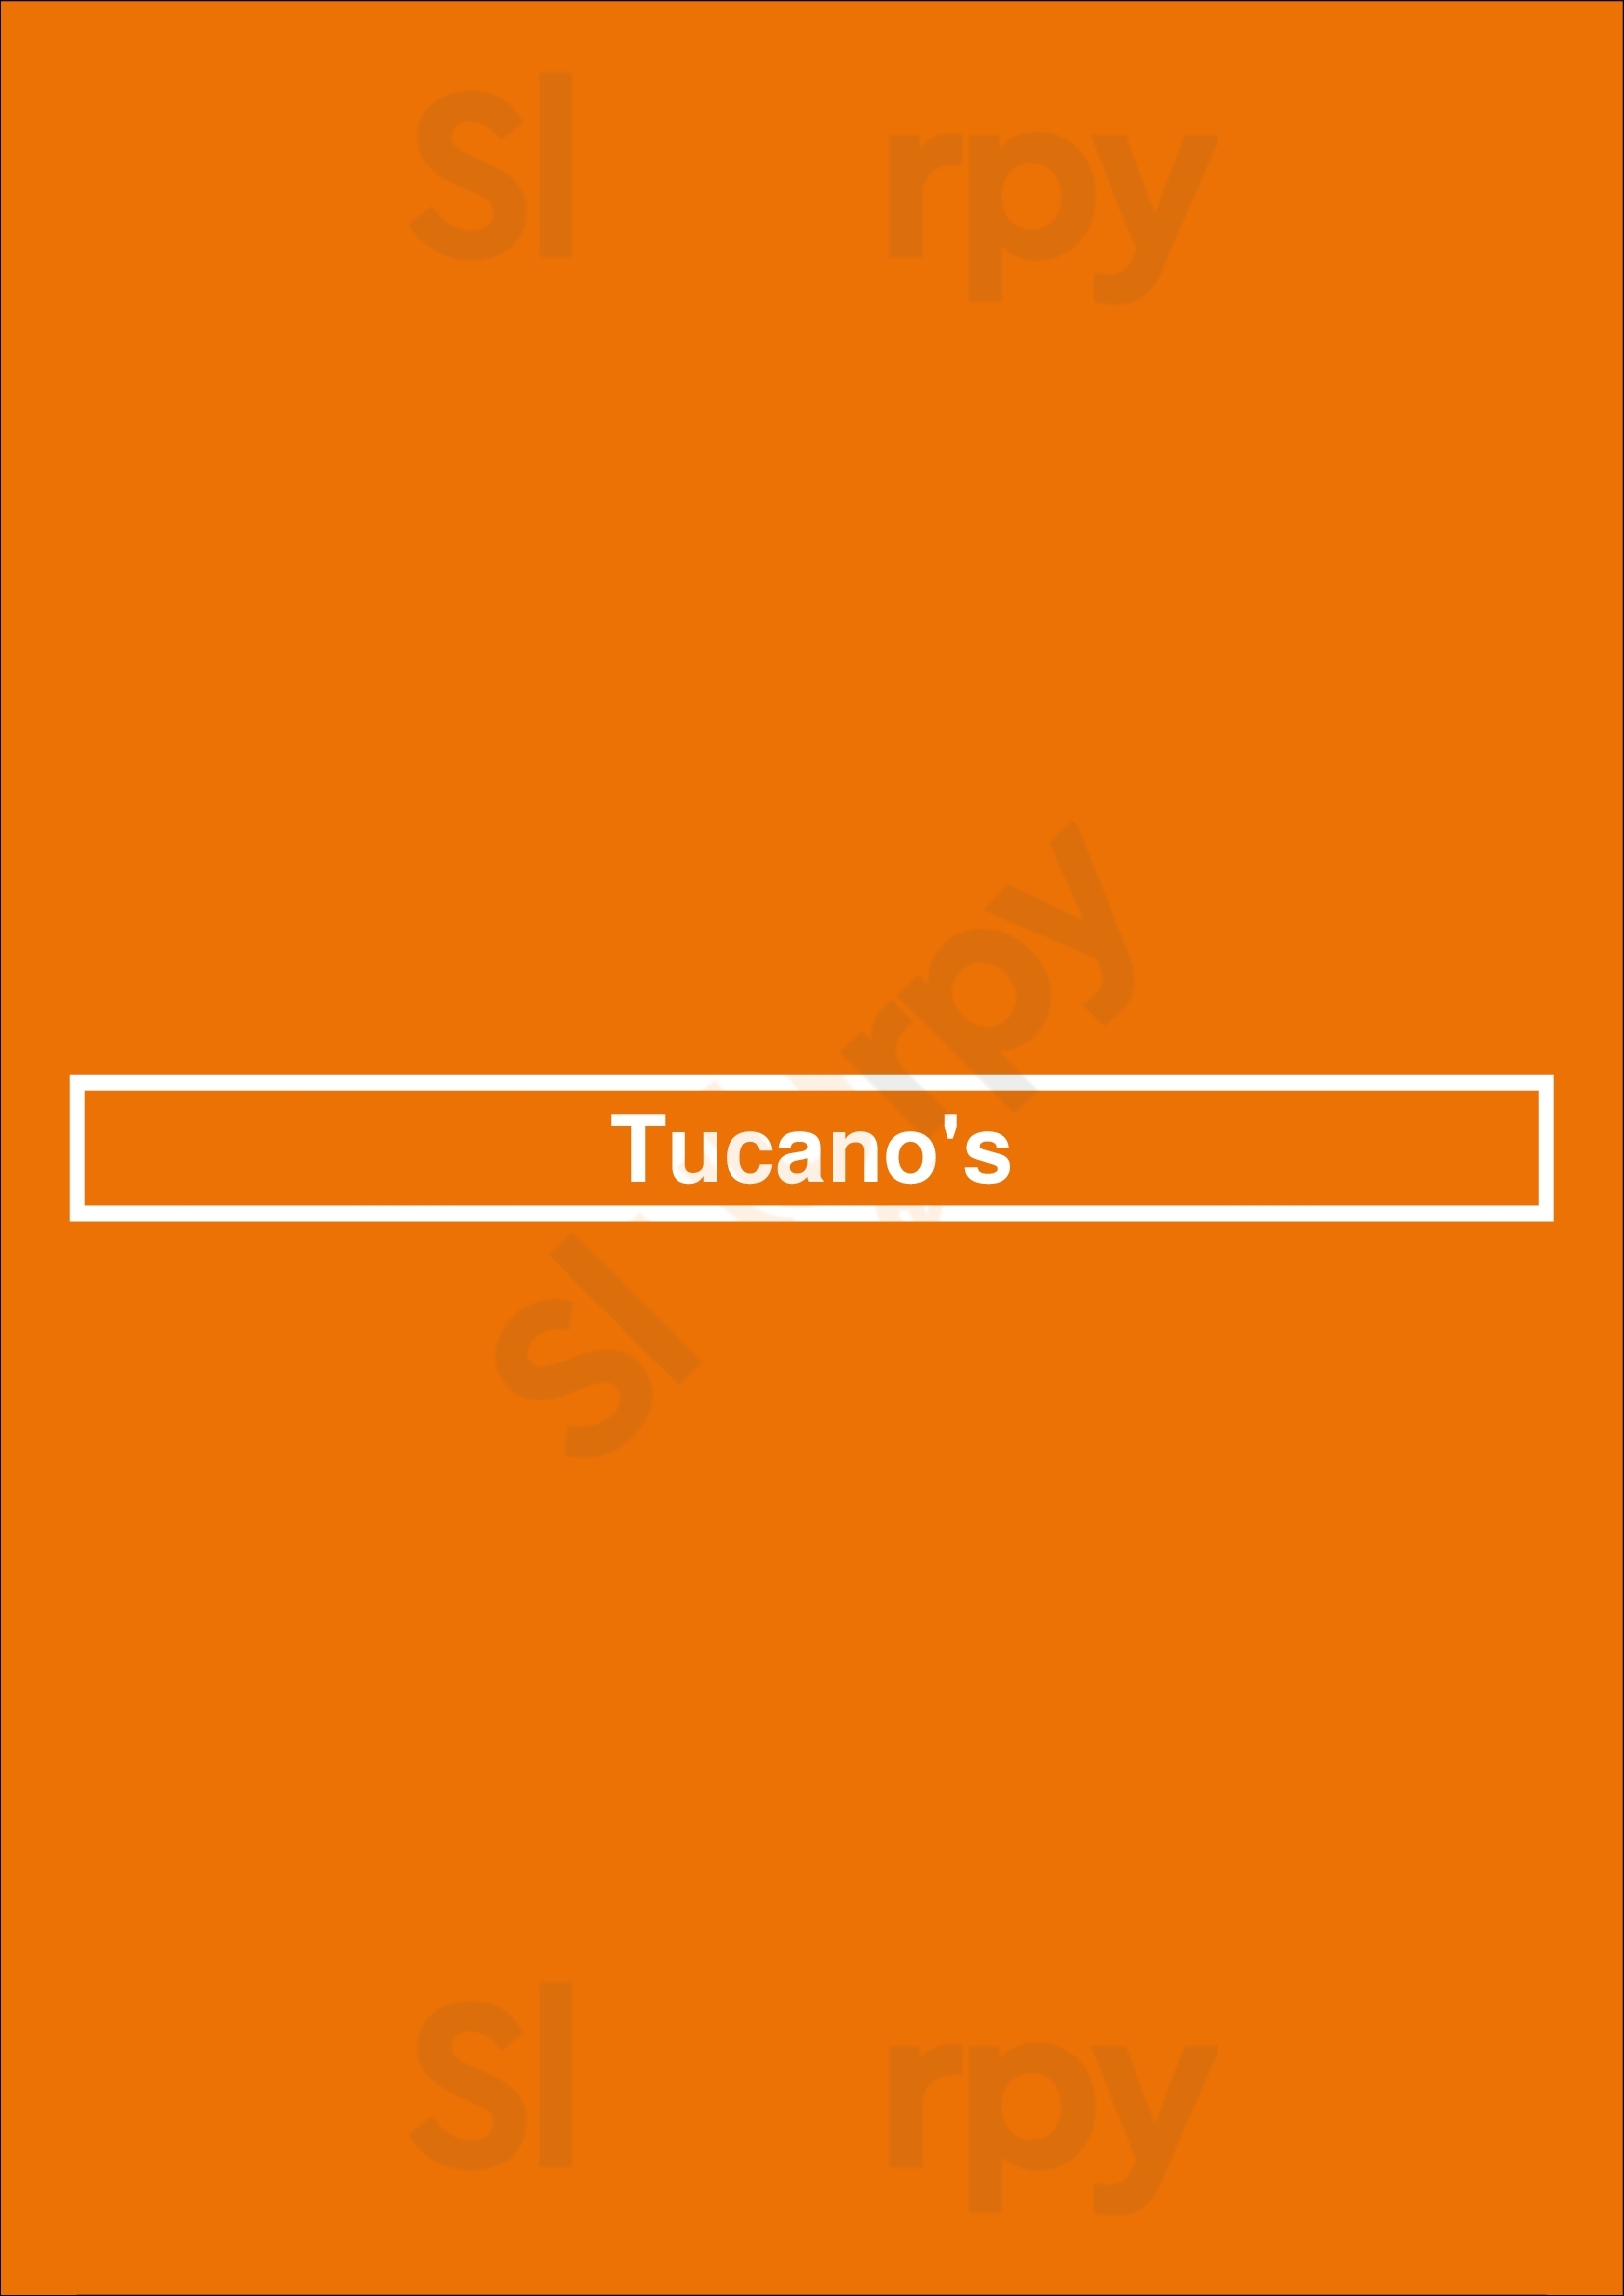 Tucano's Quinta do Lago Menu - 1